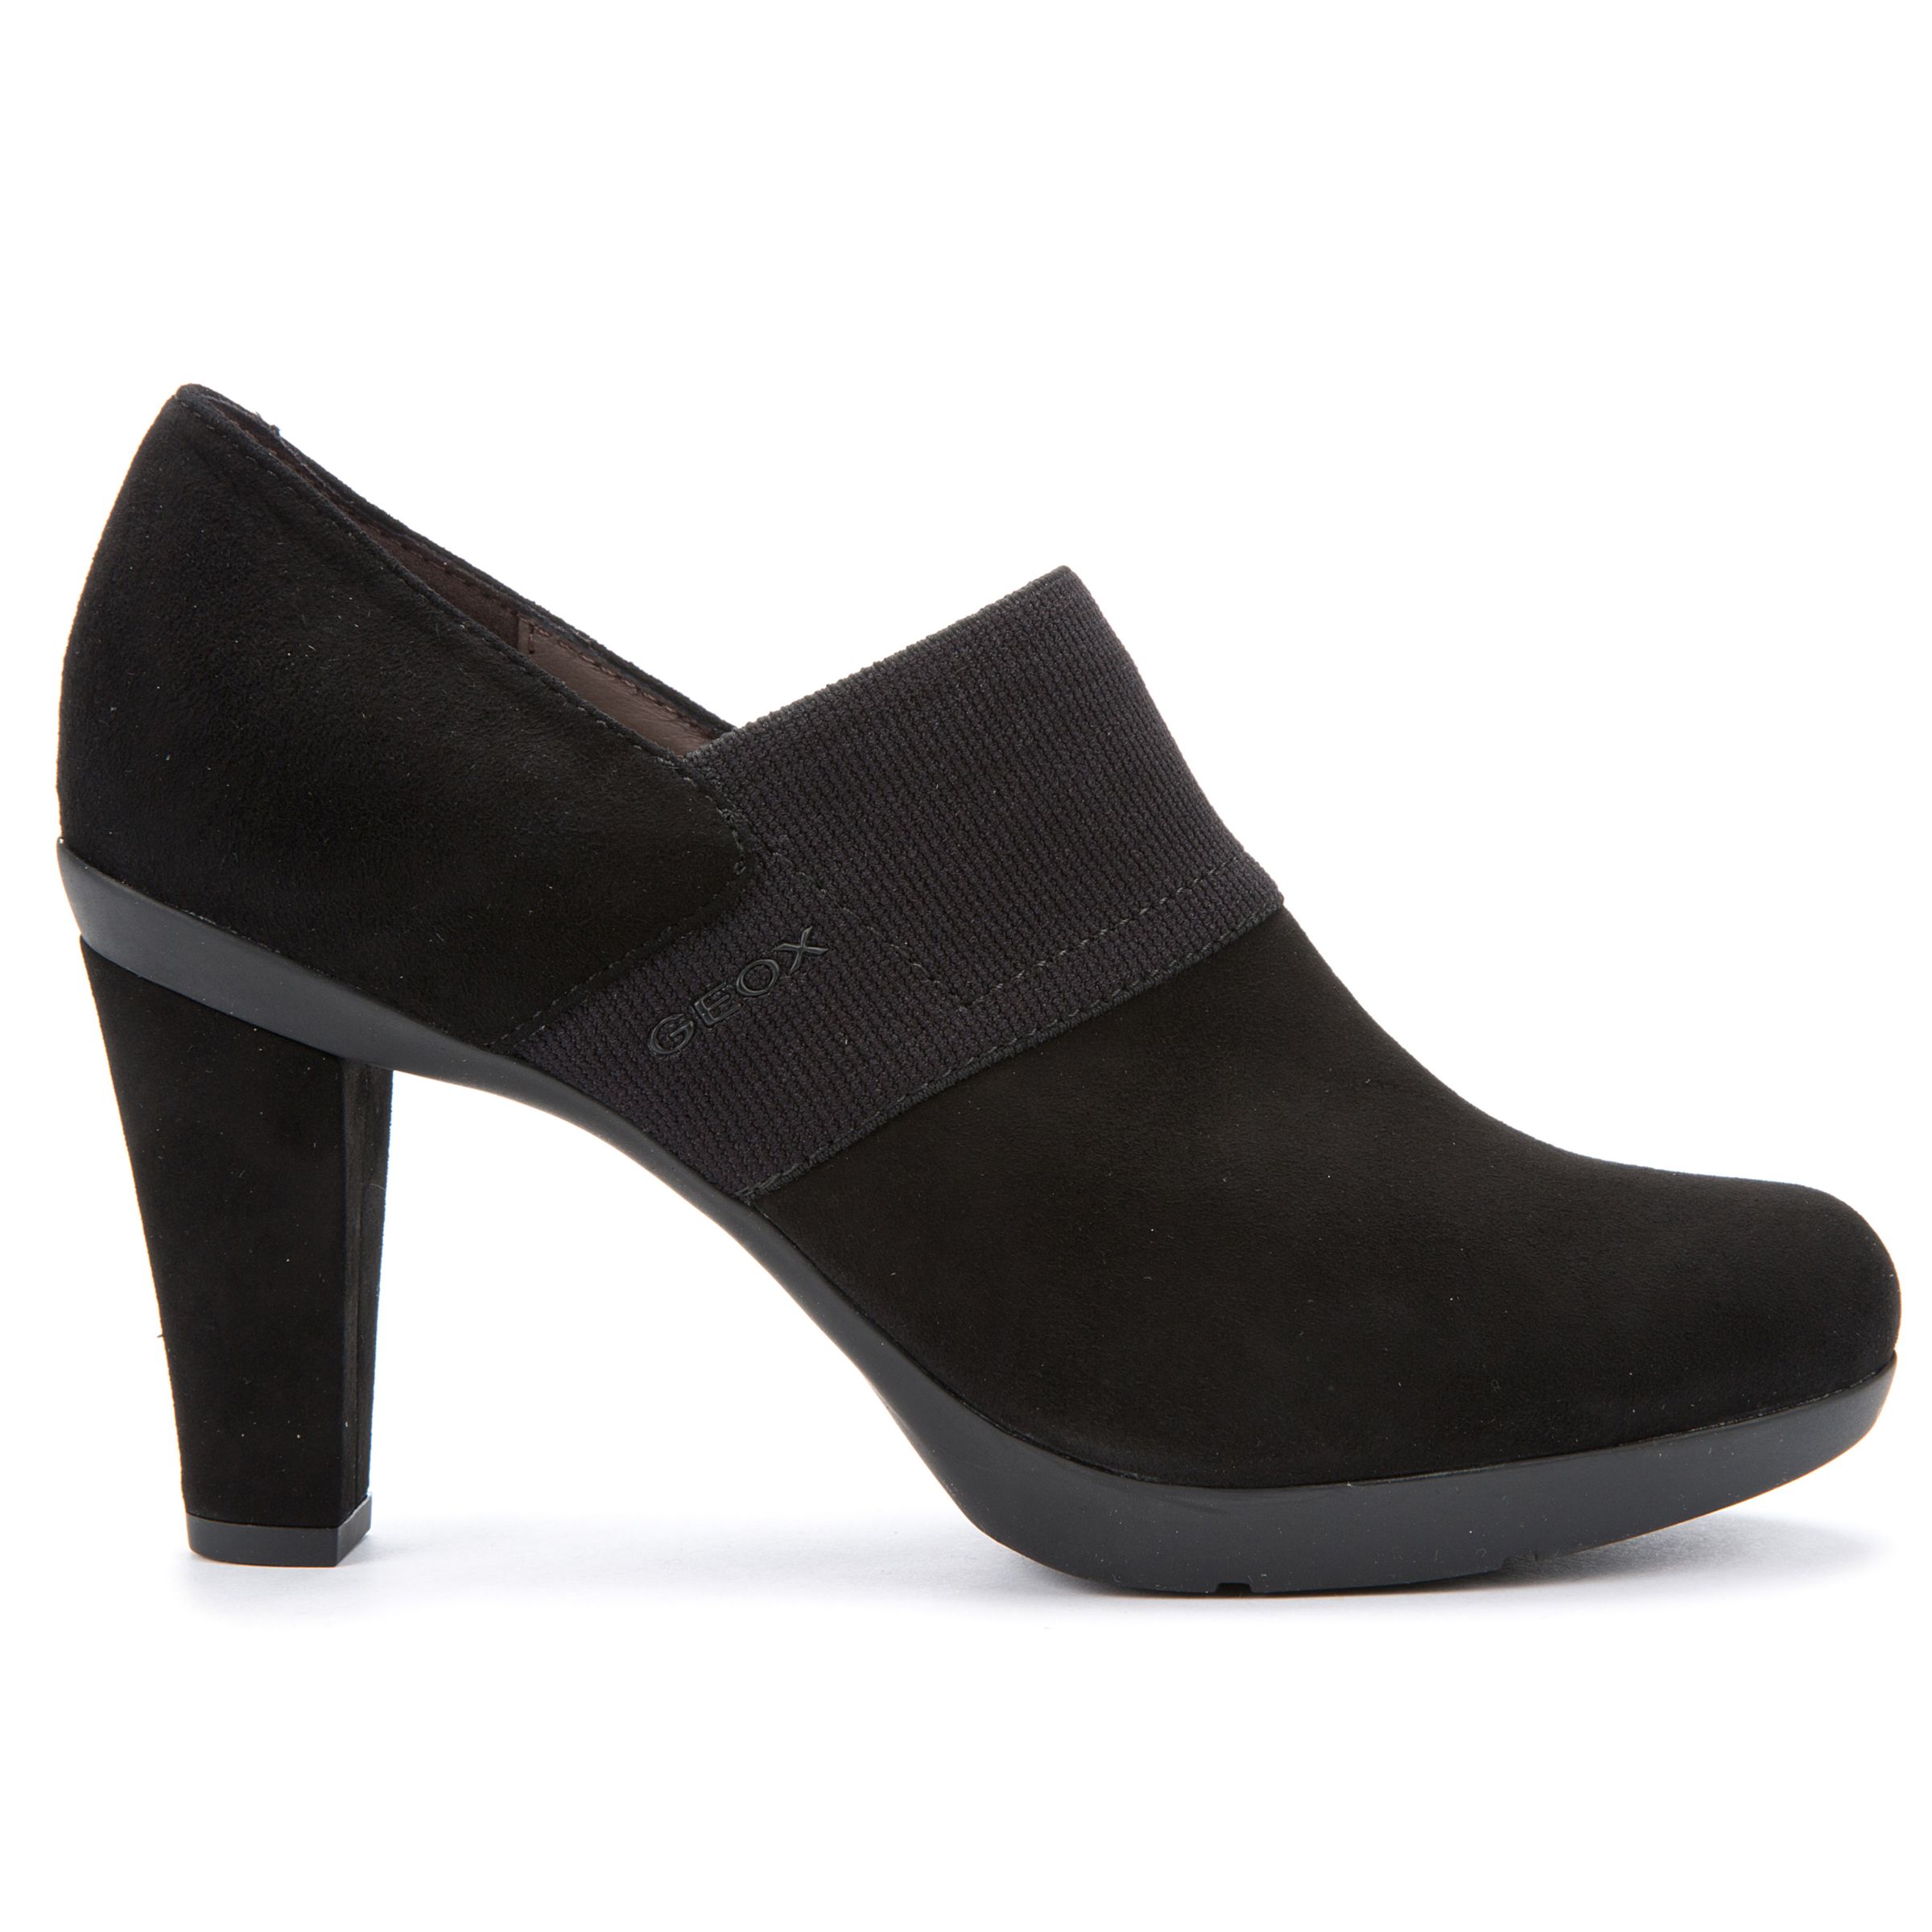 Geox Women's Inspiration Block Heeled Shoe Boots, Black Suede